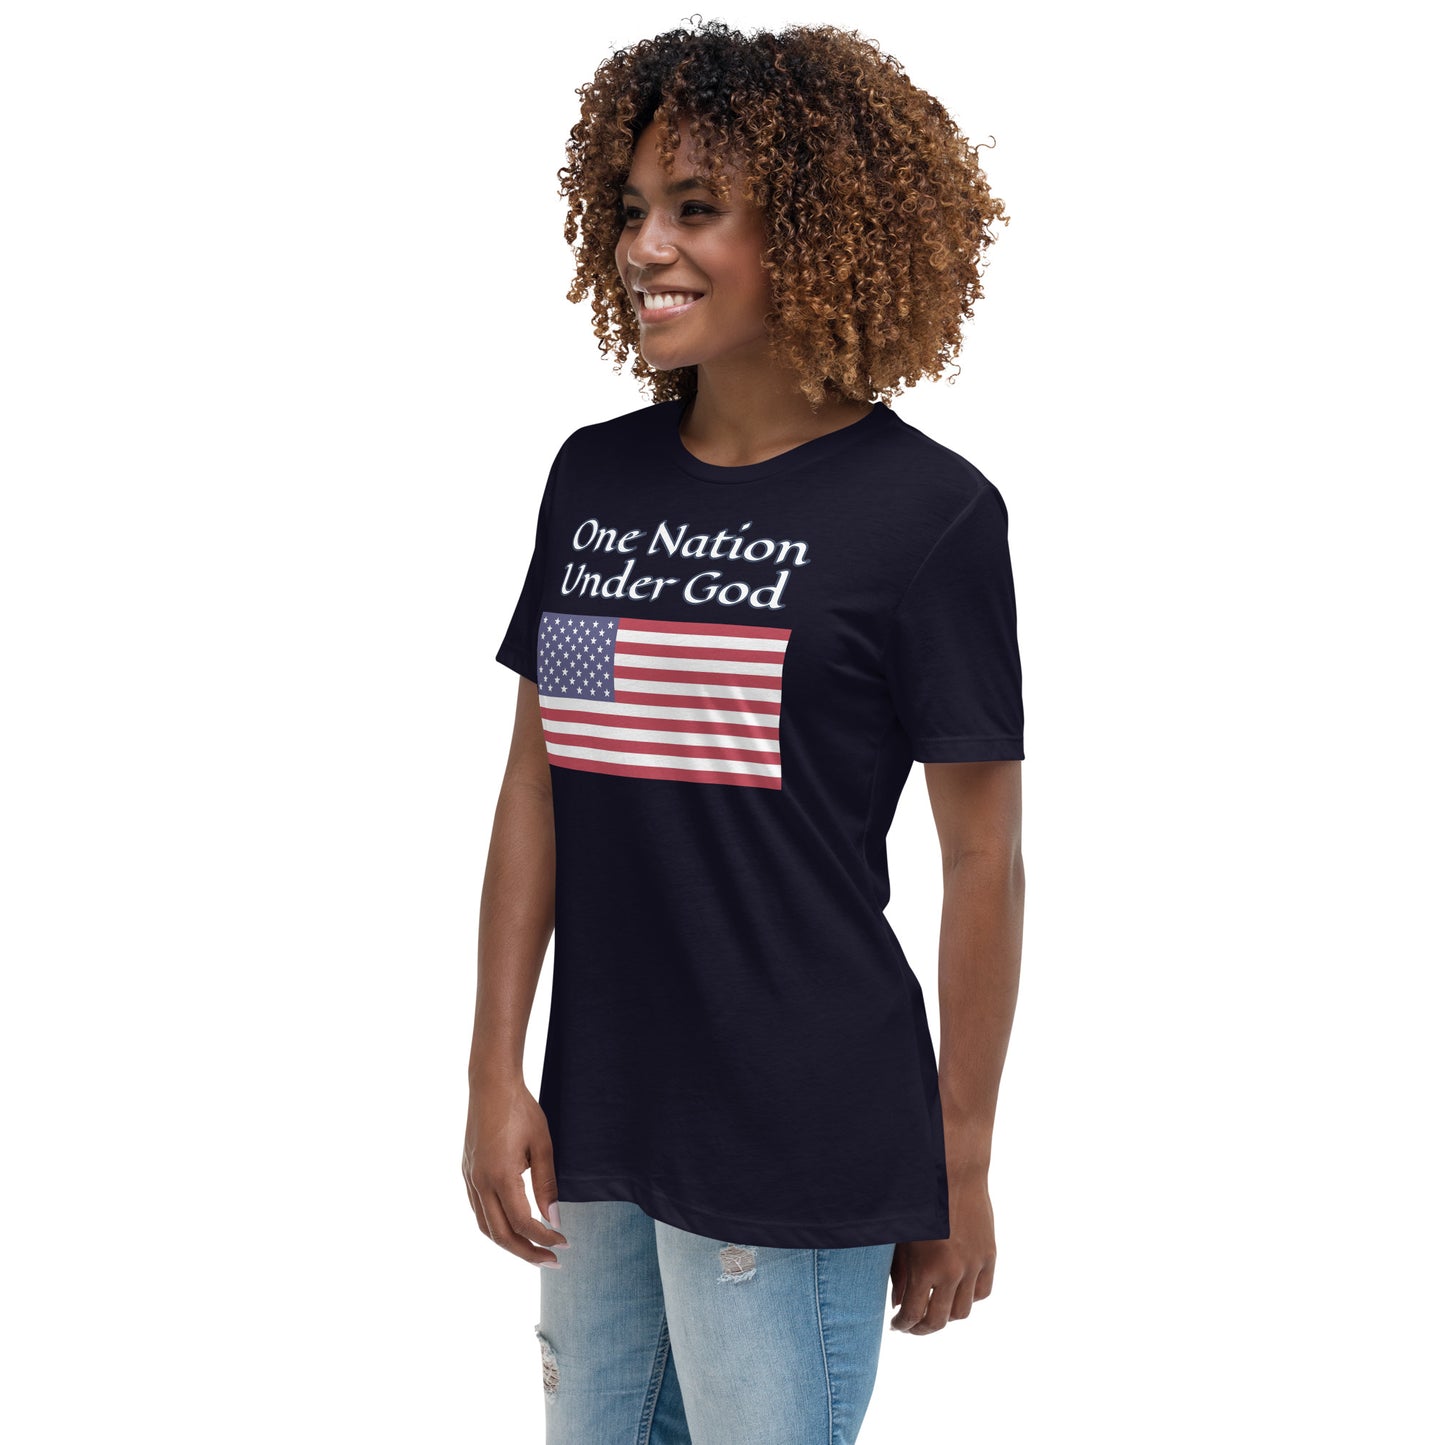 Womens Patriotic Shirt